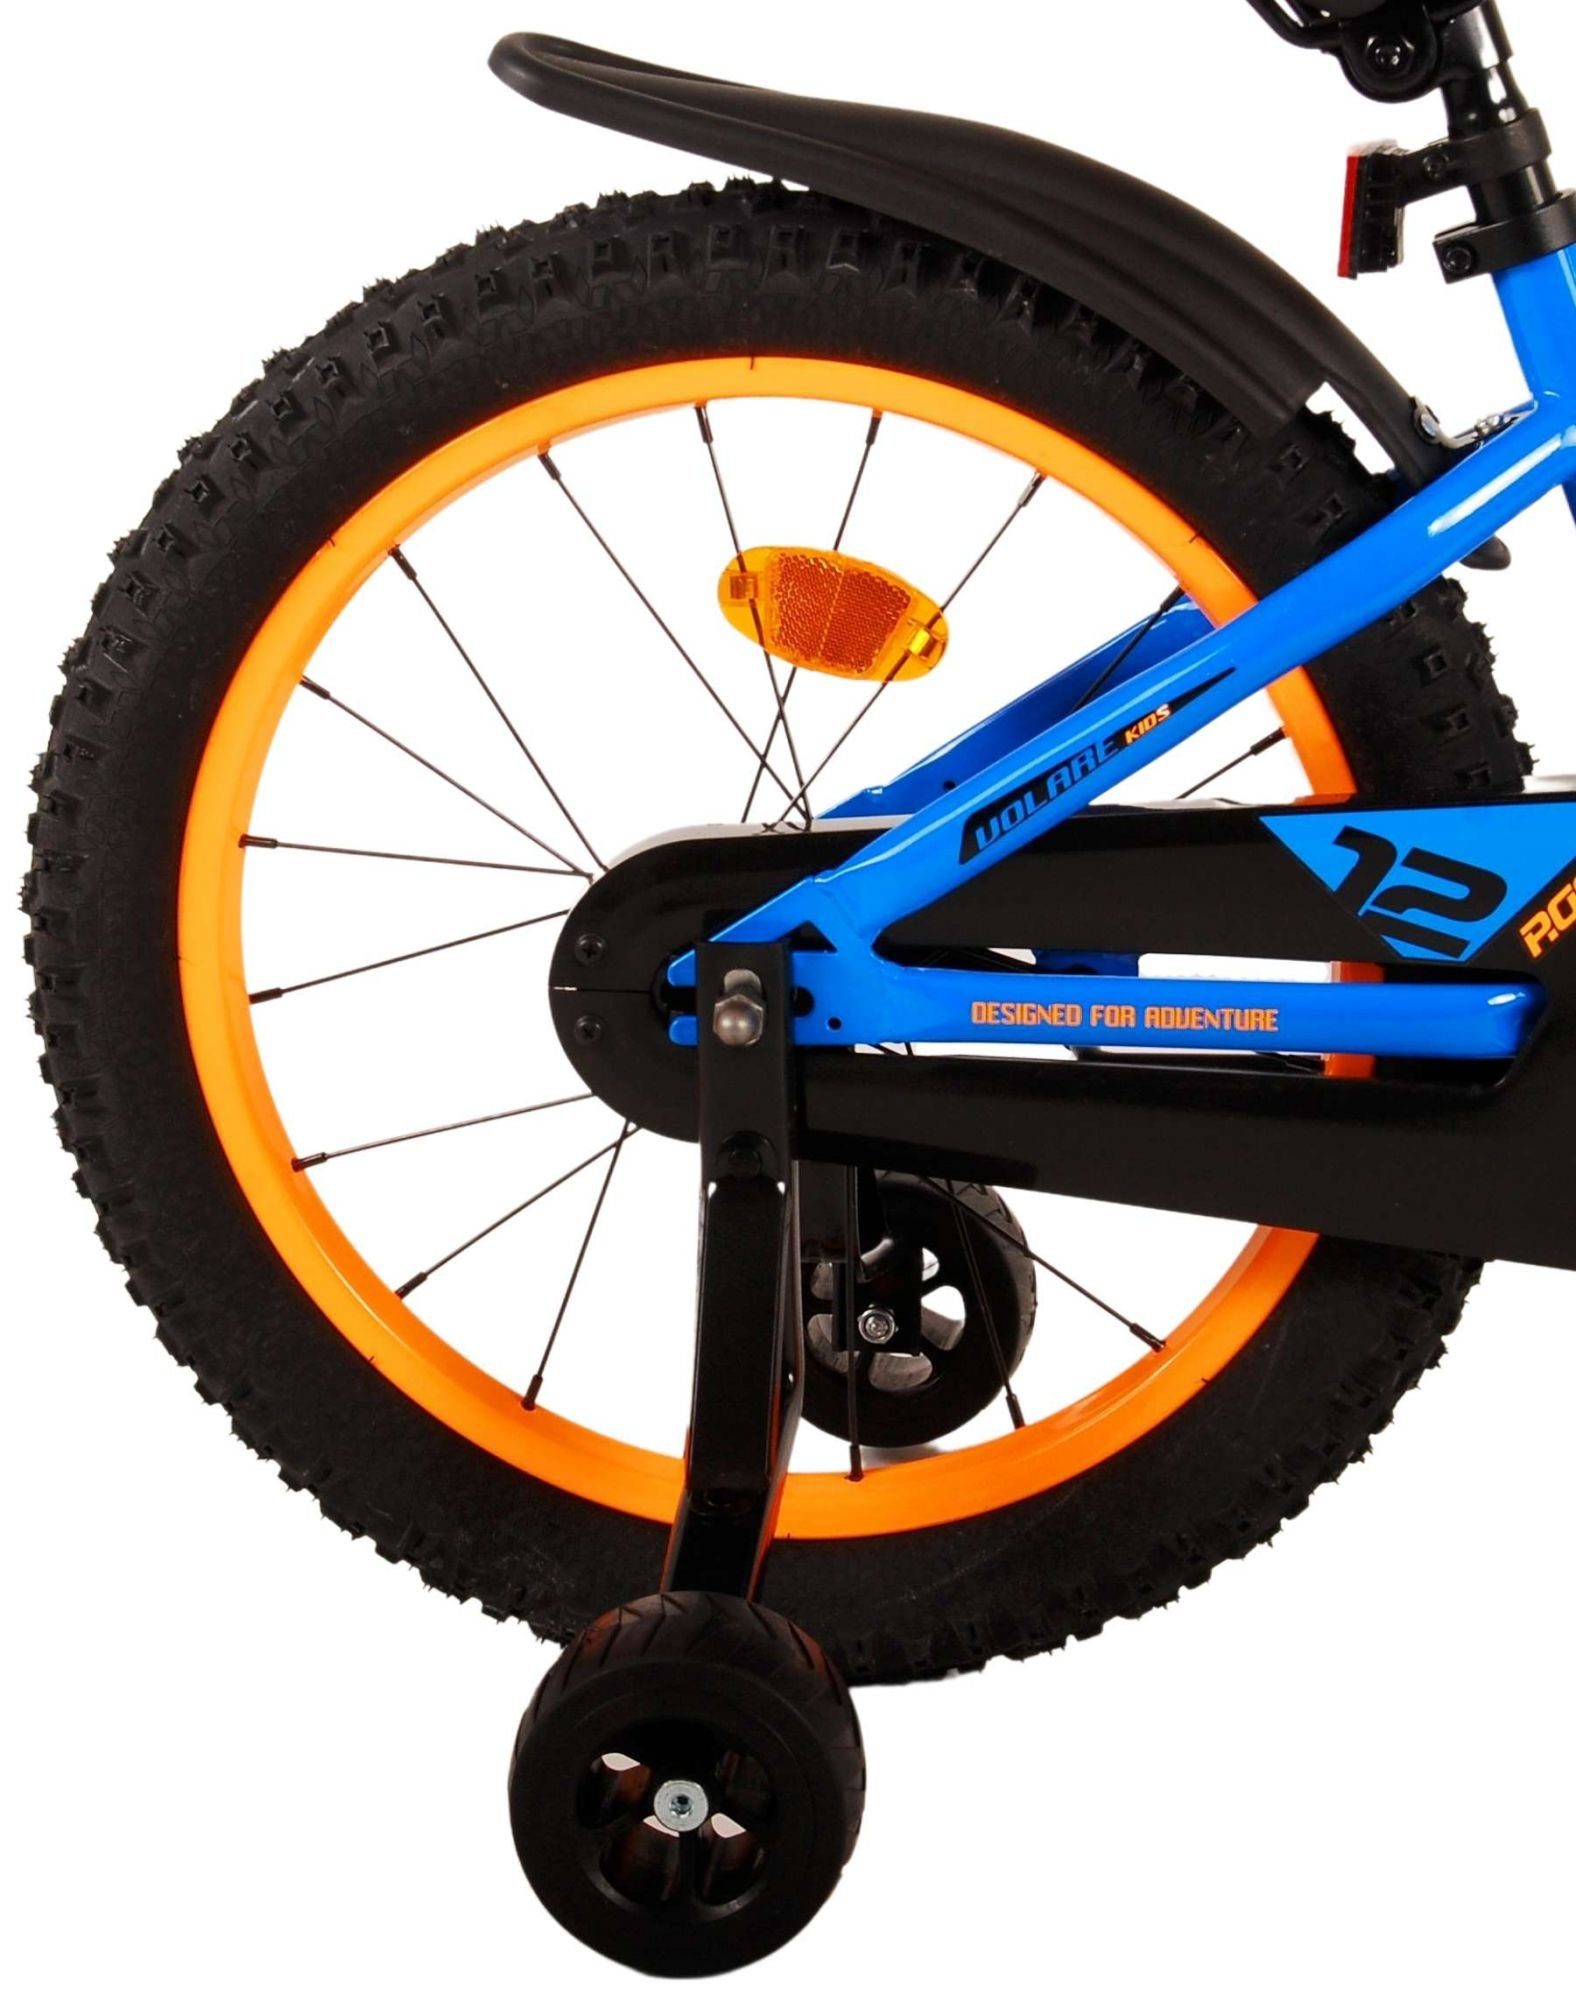 LeNoSa Kinderfahrrad Adventure 18 Zoll Blau - Prime Collection - Fahrrad  für Jungen 4-7, 1 Gang, Handbremse & Rücktrittbremse